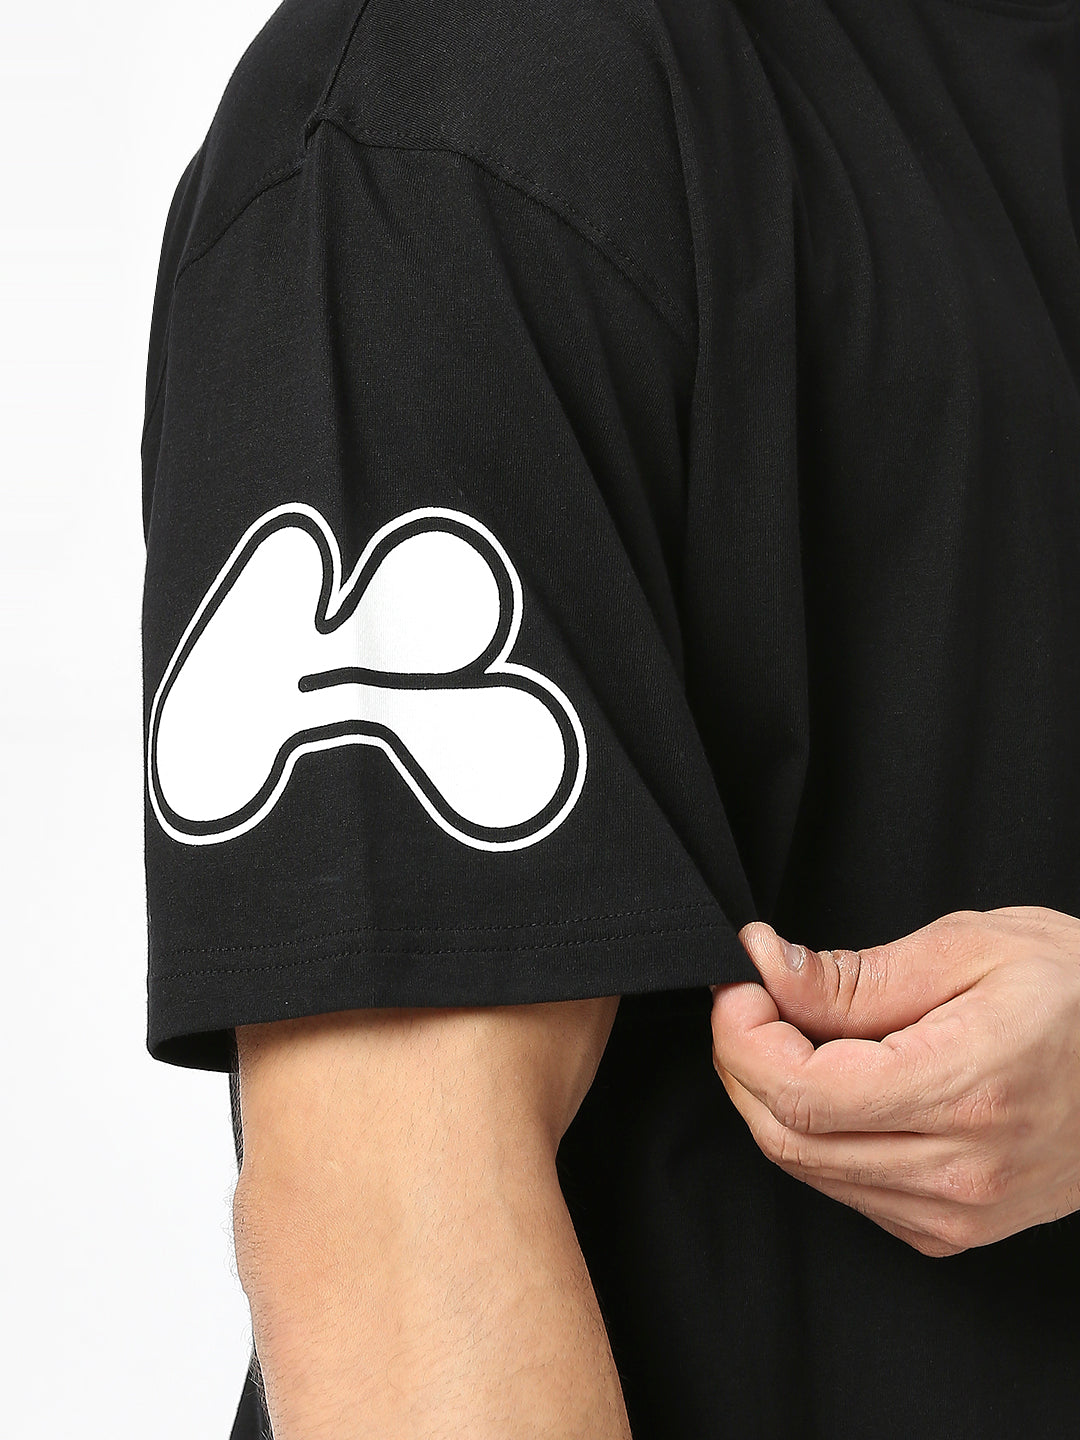 BLAMBLACK Men's Over-sized Puff Print T-Shirt